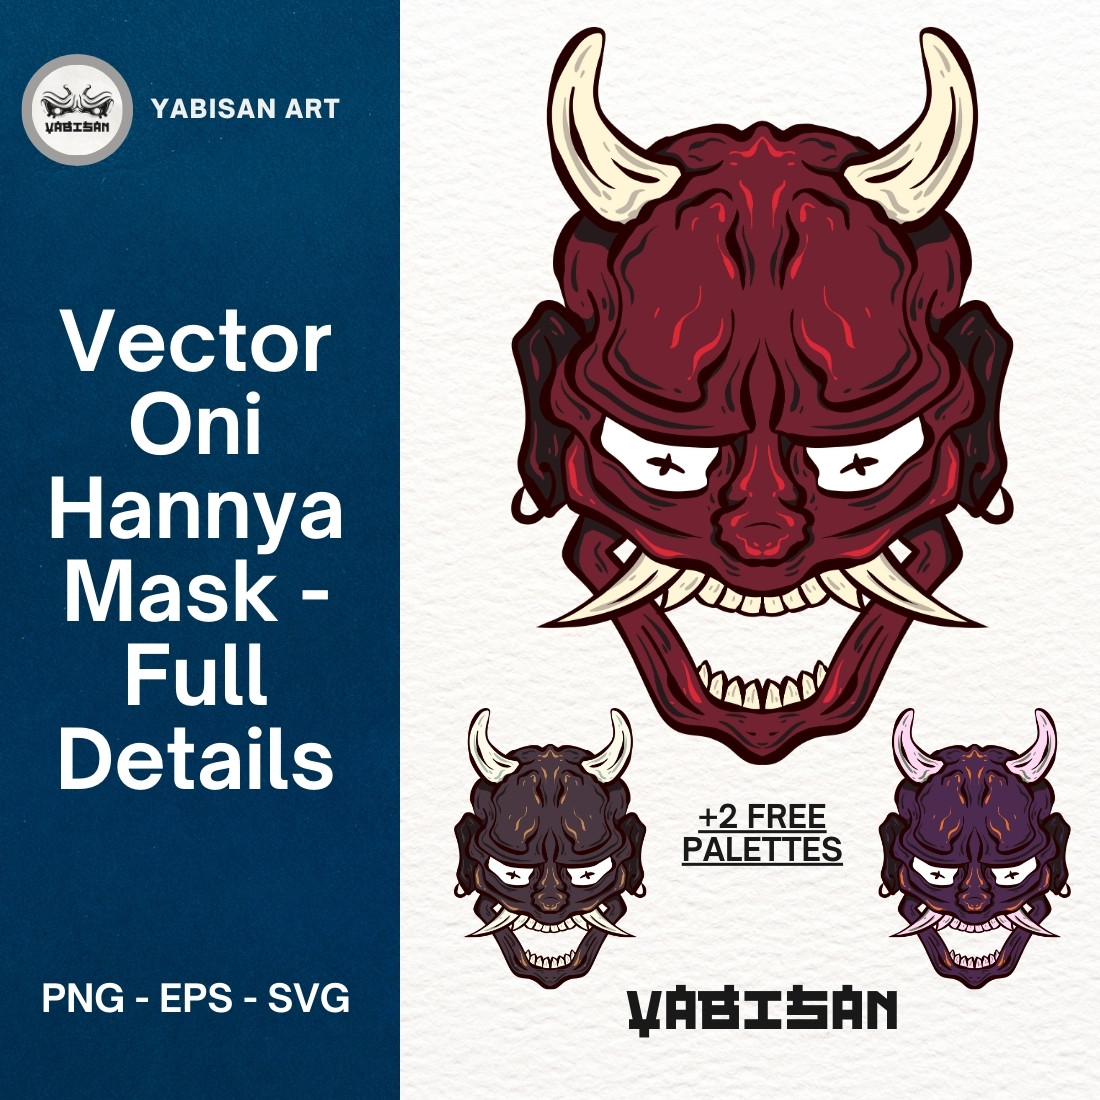 Oni Hannya Mask art 4 - Full Details preview image.